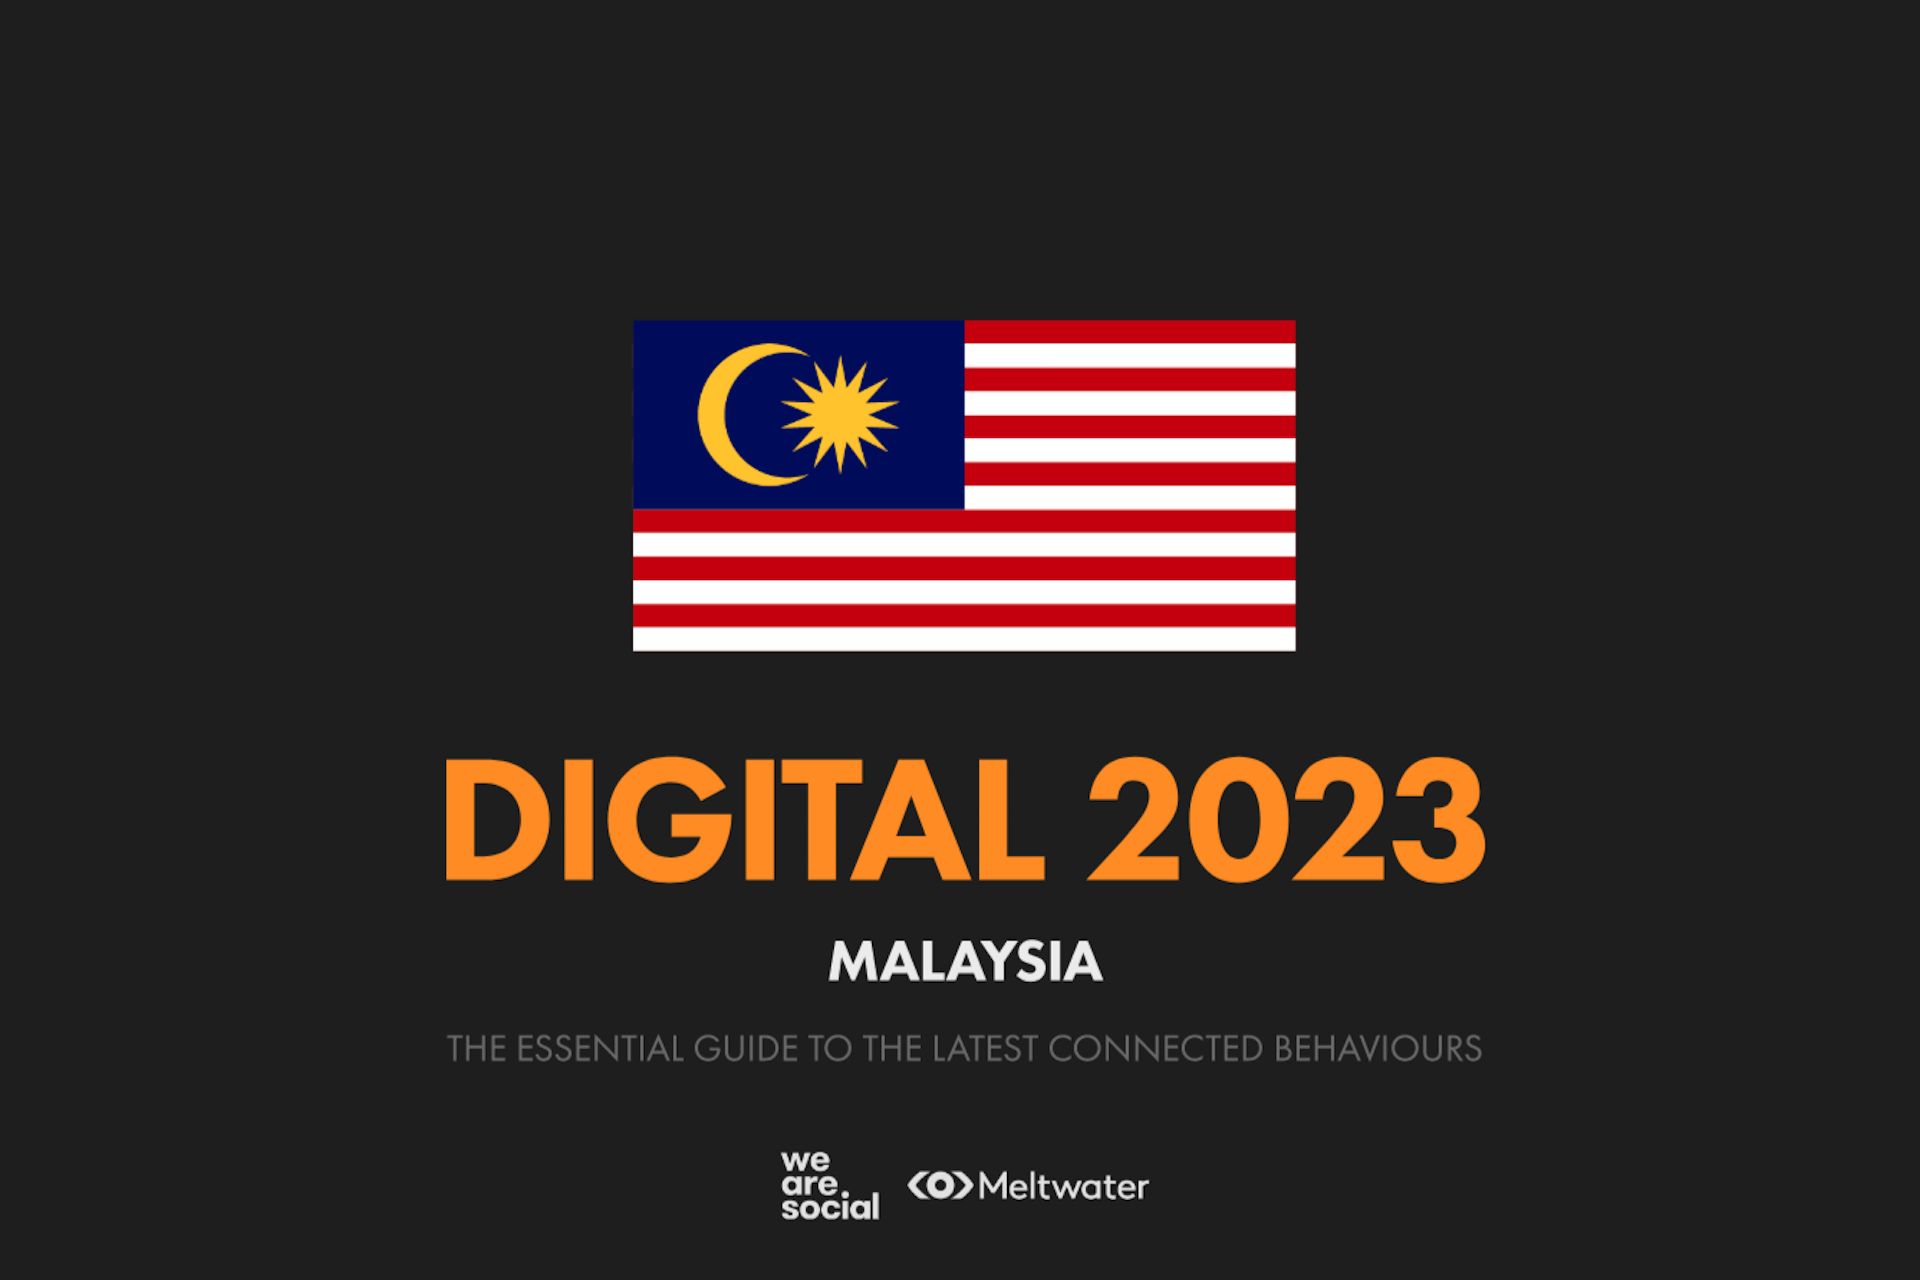 Global Digital Report 2023 for Malaysia